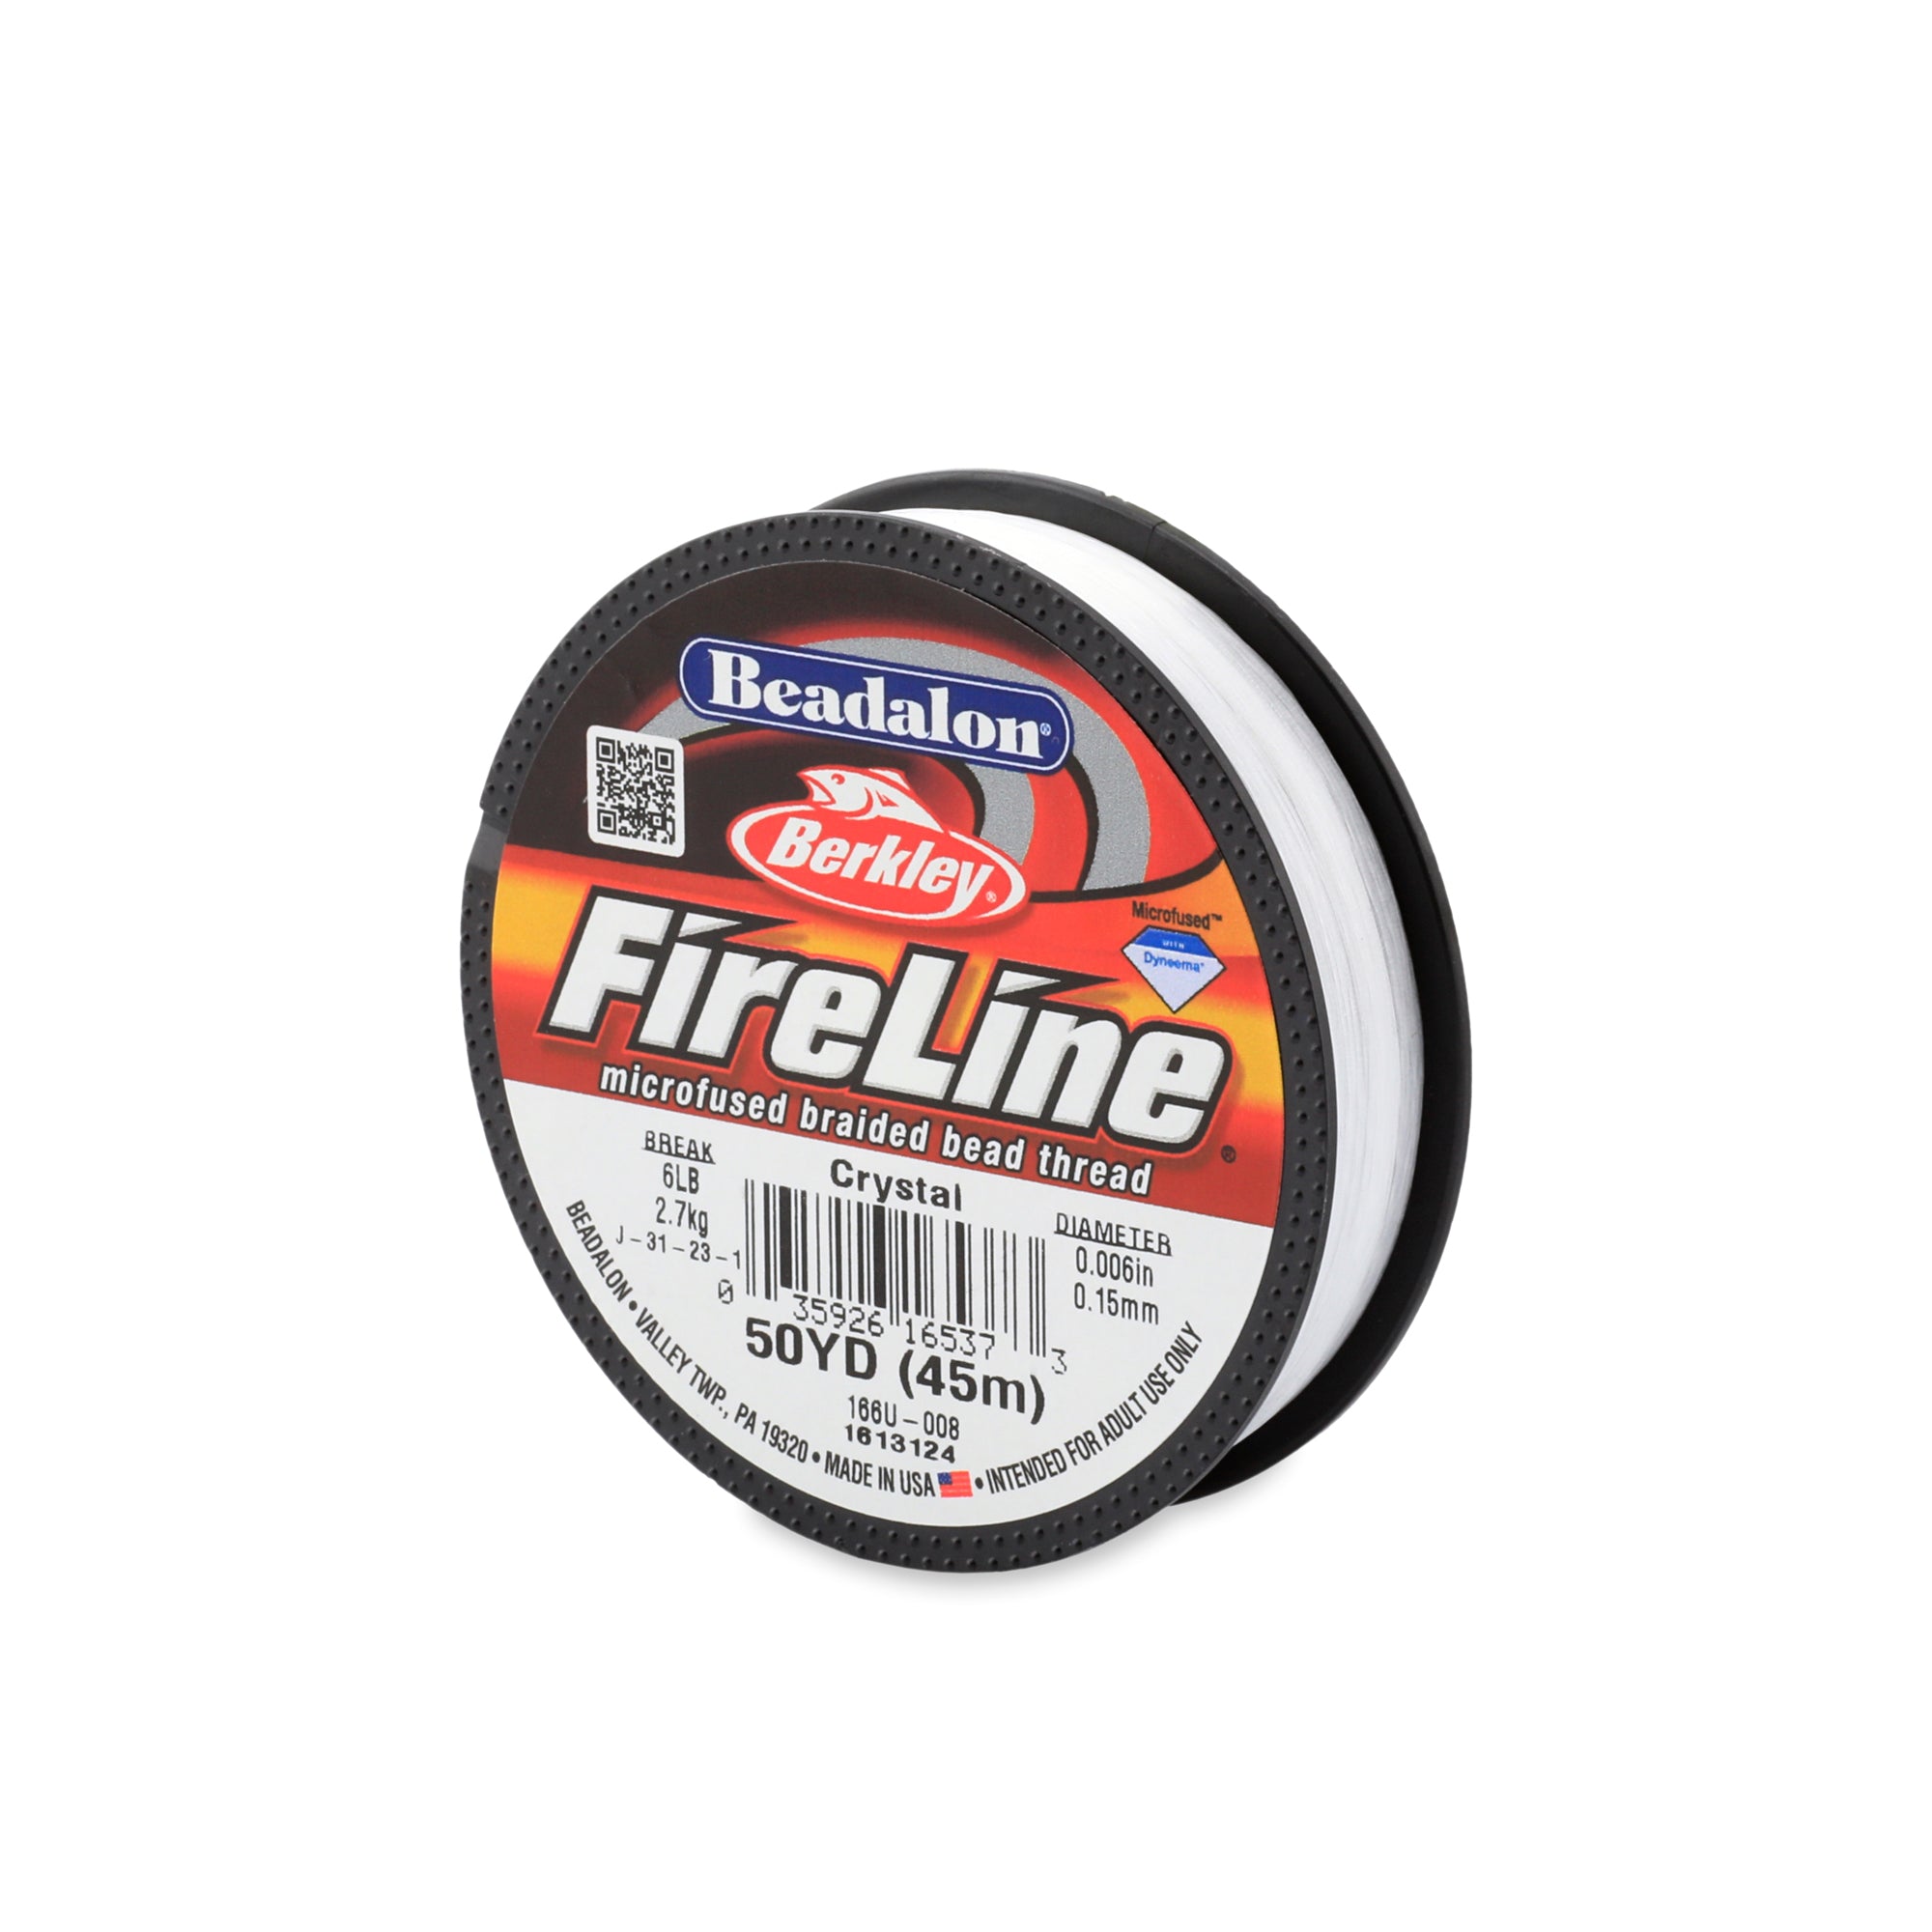 Fireline 6lb